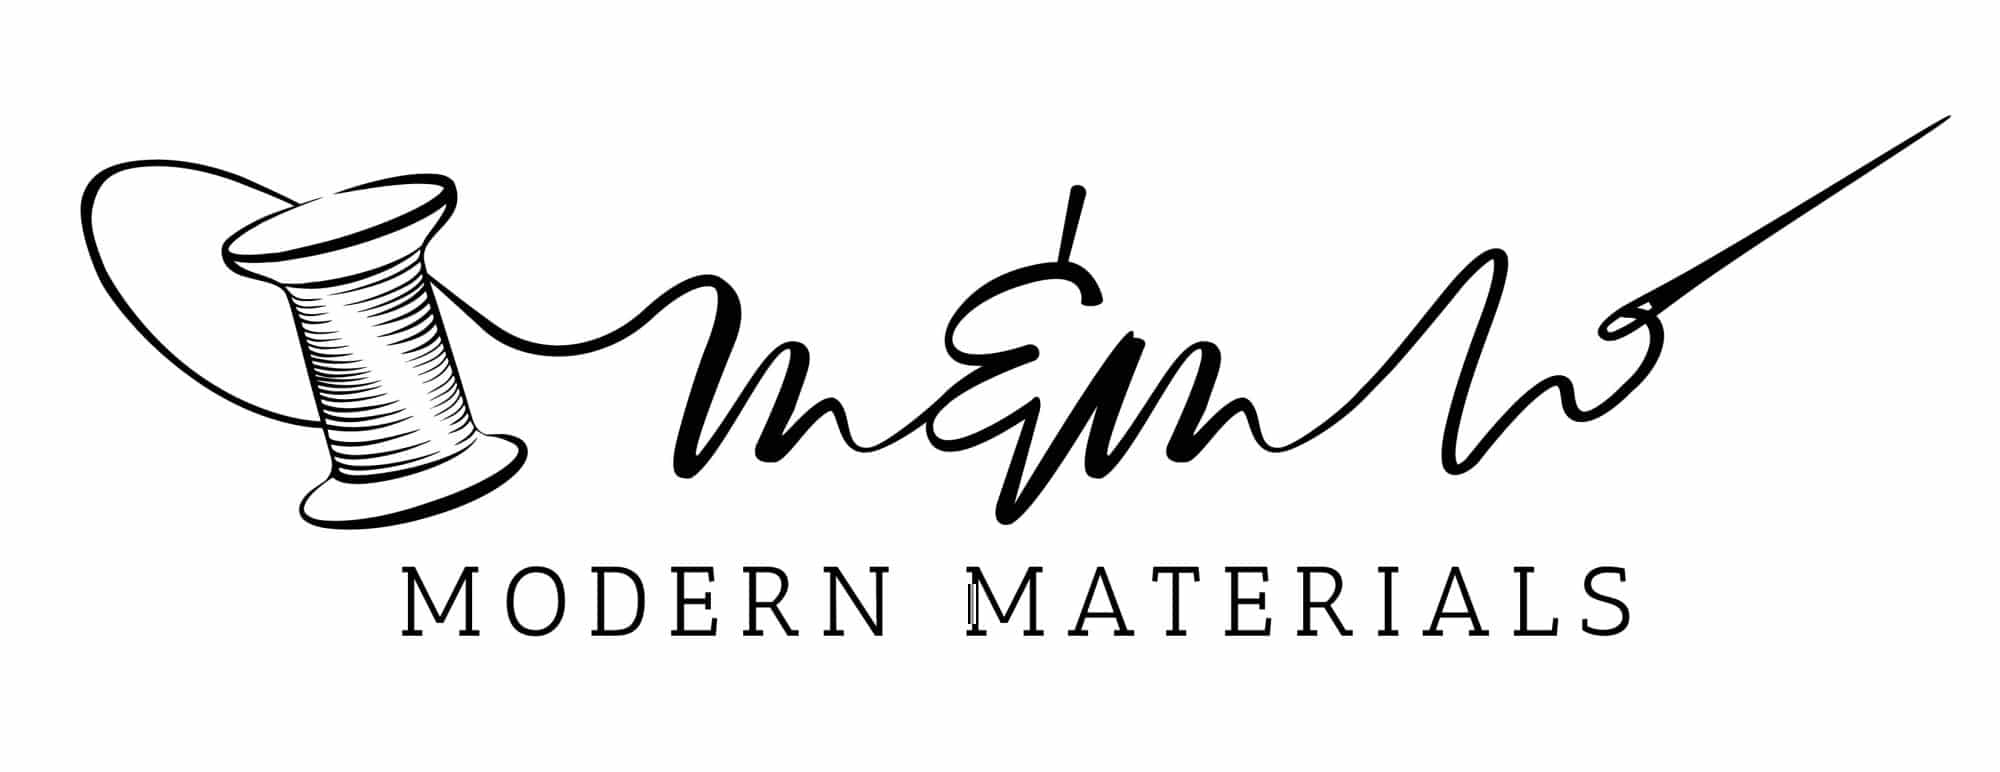 ModernMaterial BlackOnly logo 01